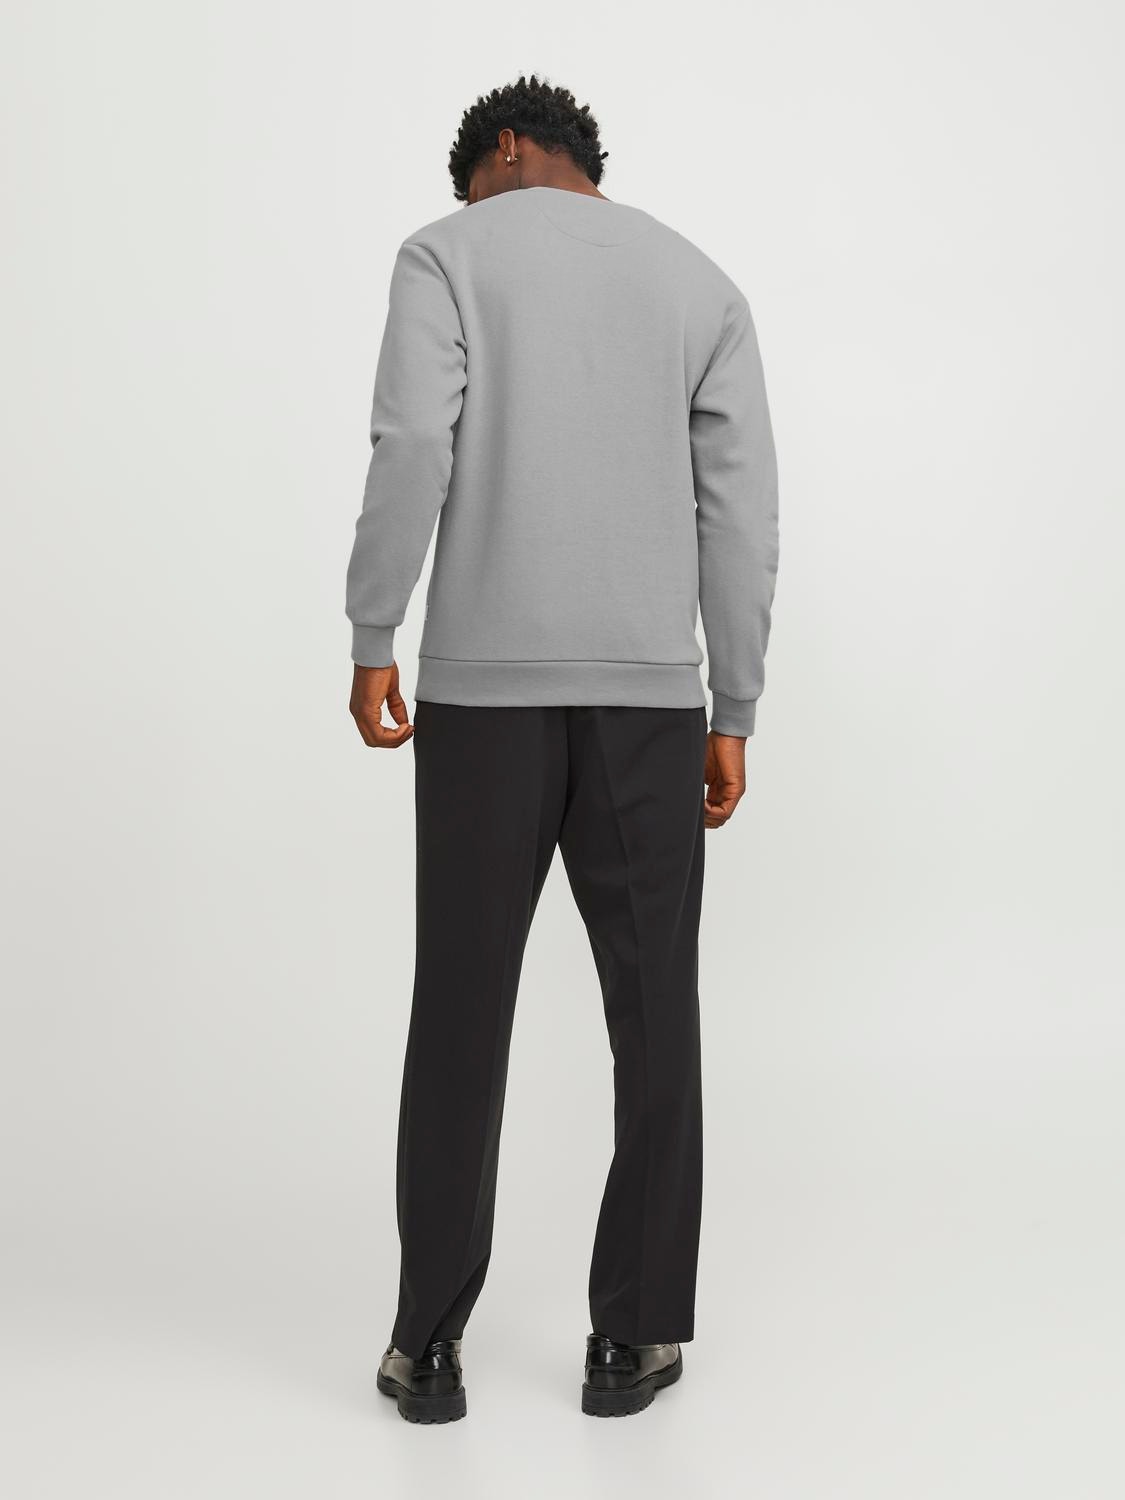 Jack & Jones Plain Crewn Neck Sweatshirt -Ultimate Grey - 12249341